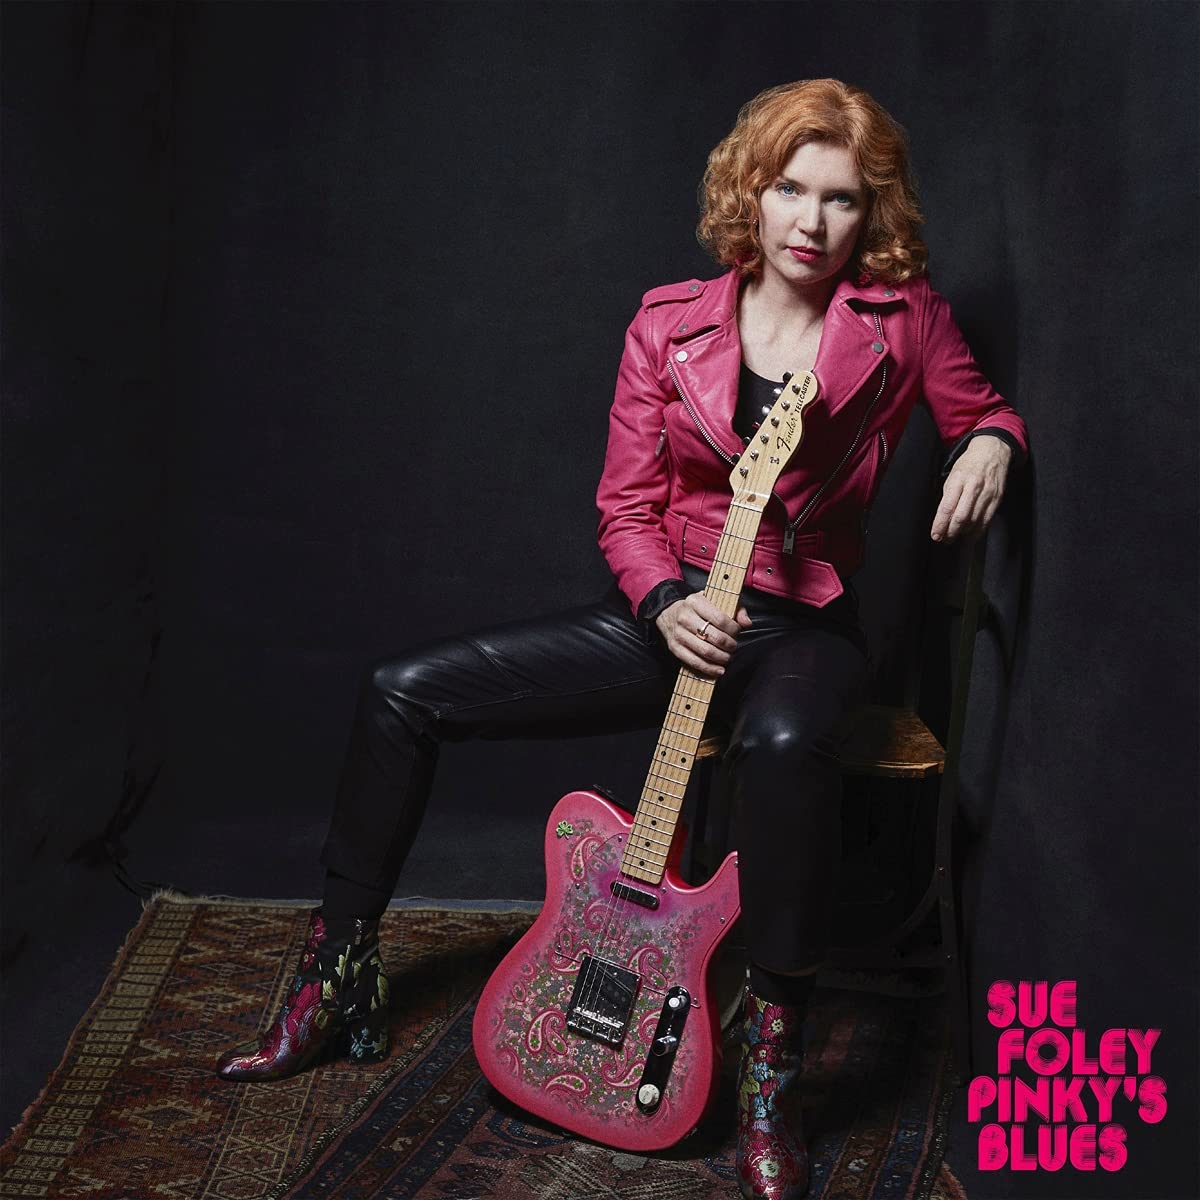 Sue Foley - Pinky's Blues (Vinyl LP)